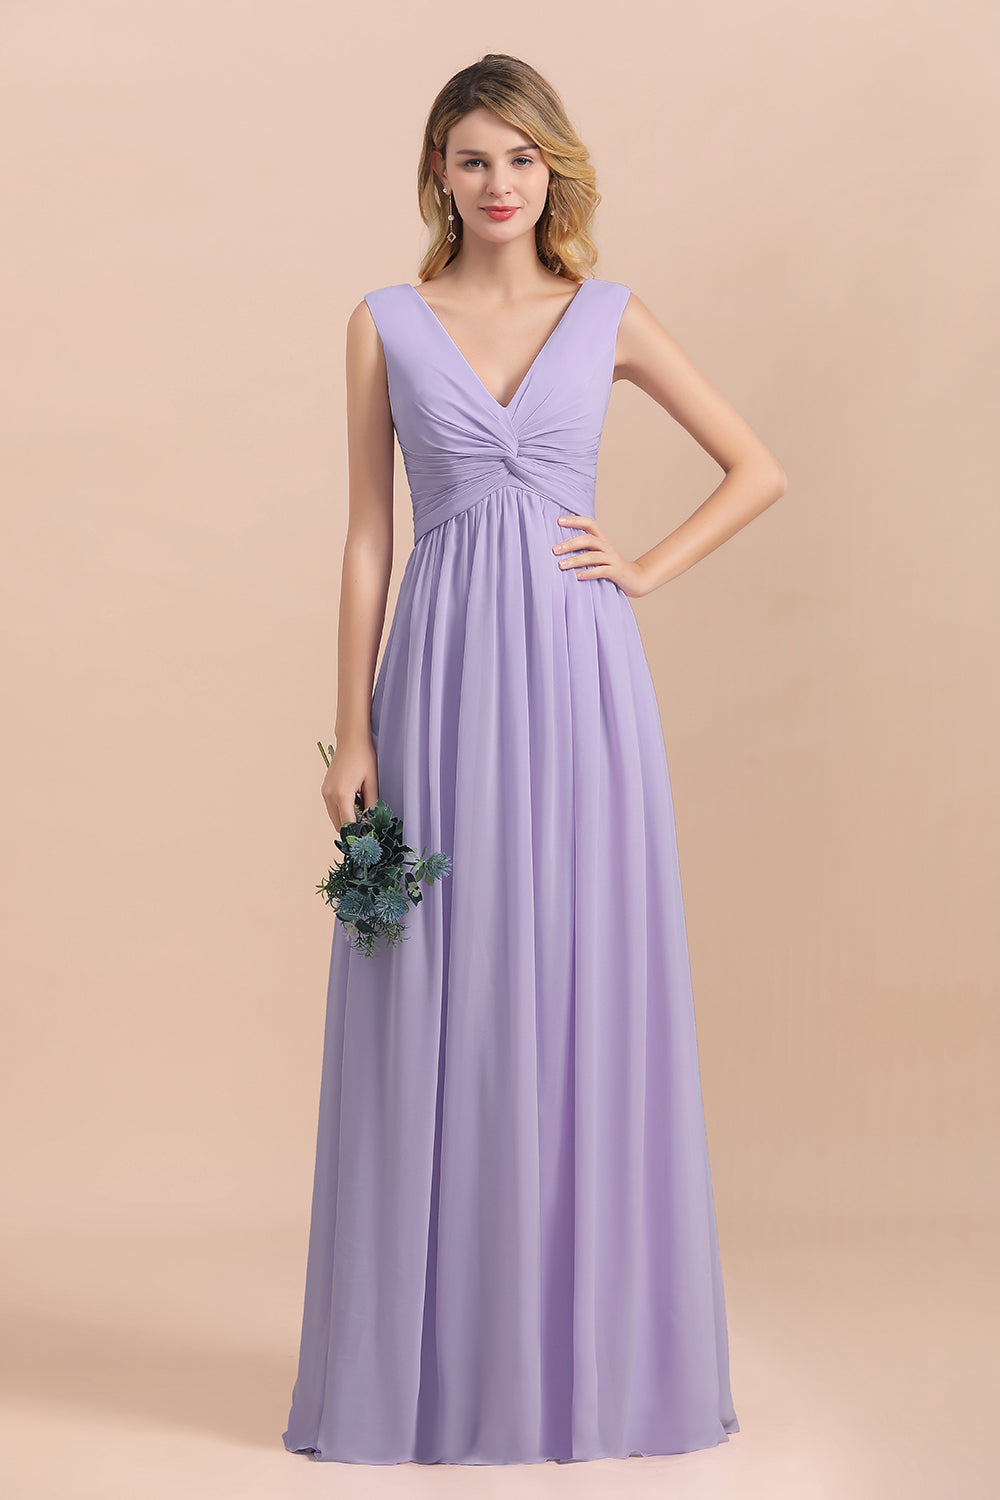 Gorgeous V-Neck Ruffle Lilac Chiffon Affordable Bridesmaid Dress with Ruffle